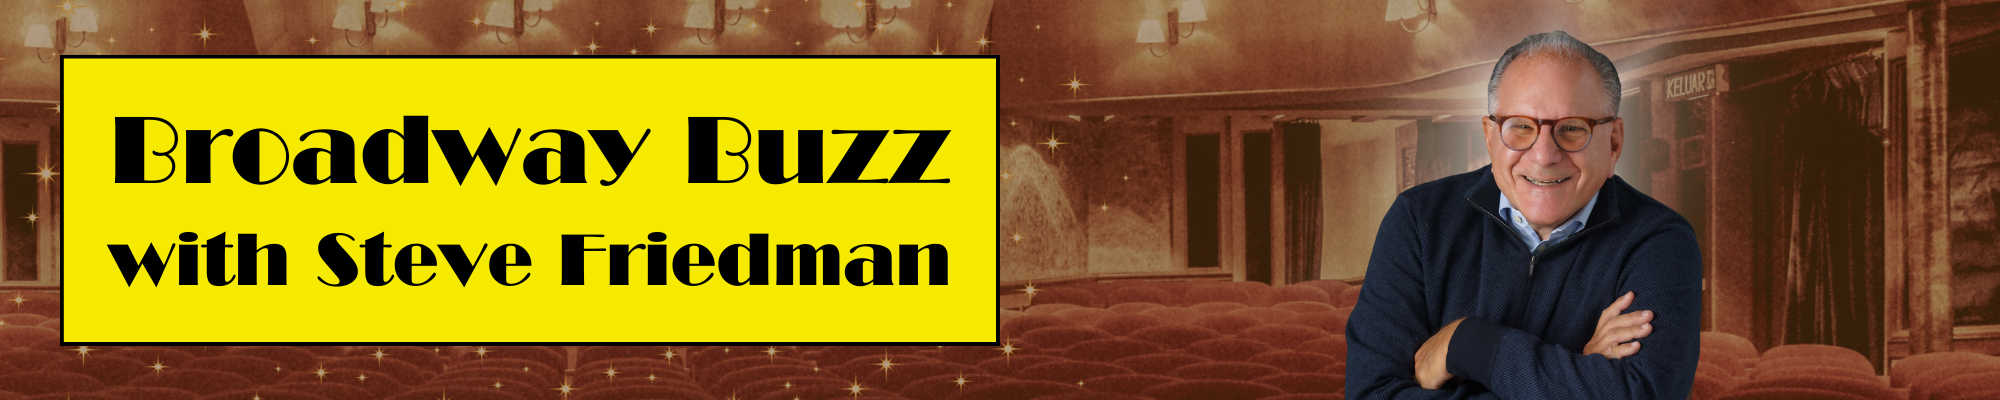 Broadway Buzz with Steve Friedman - Website